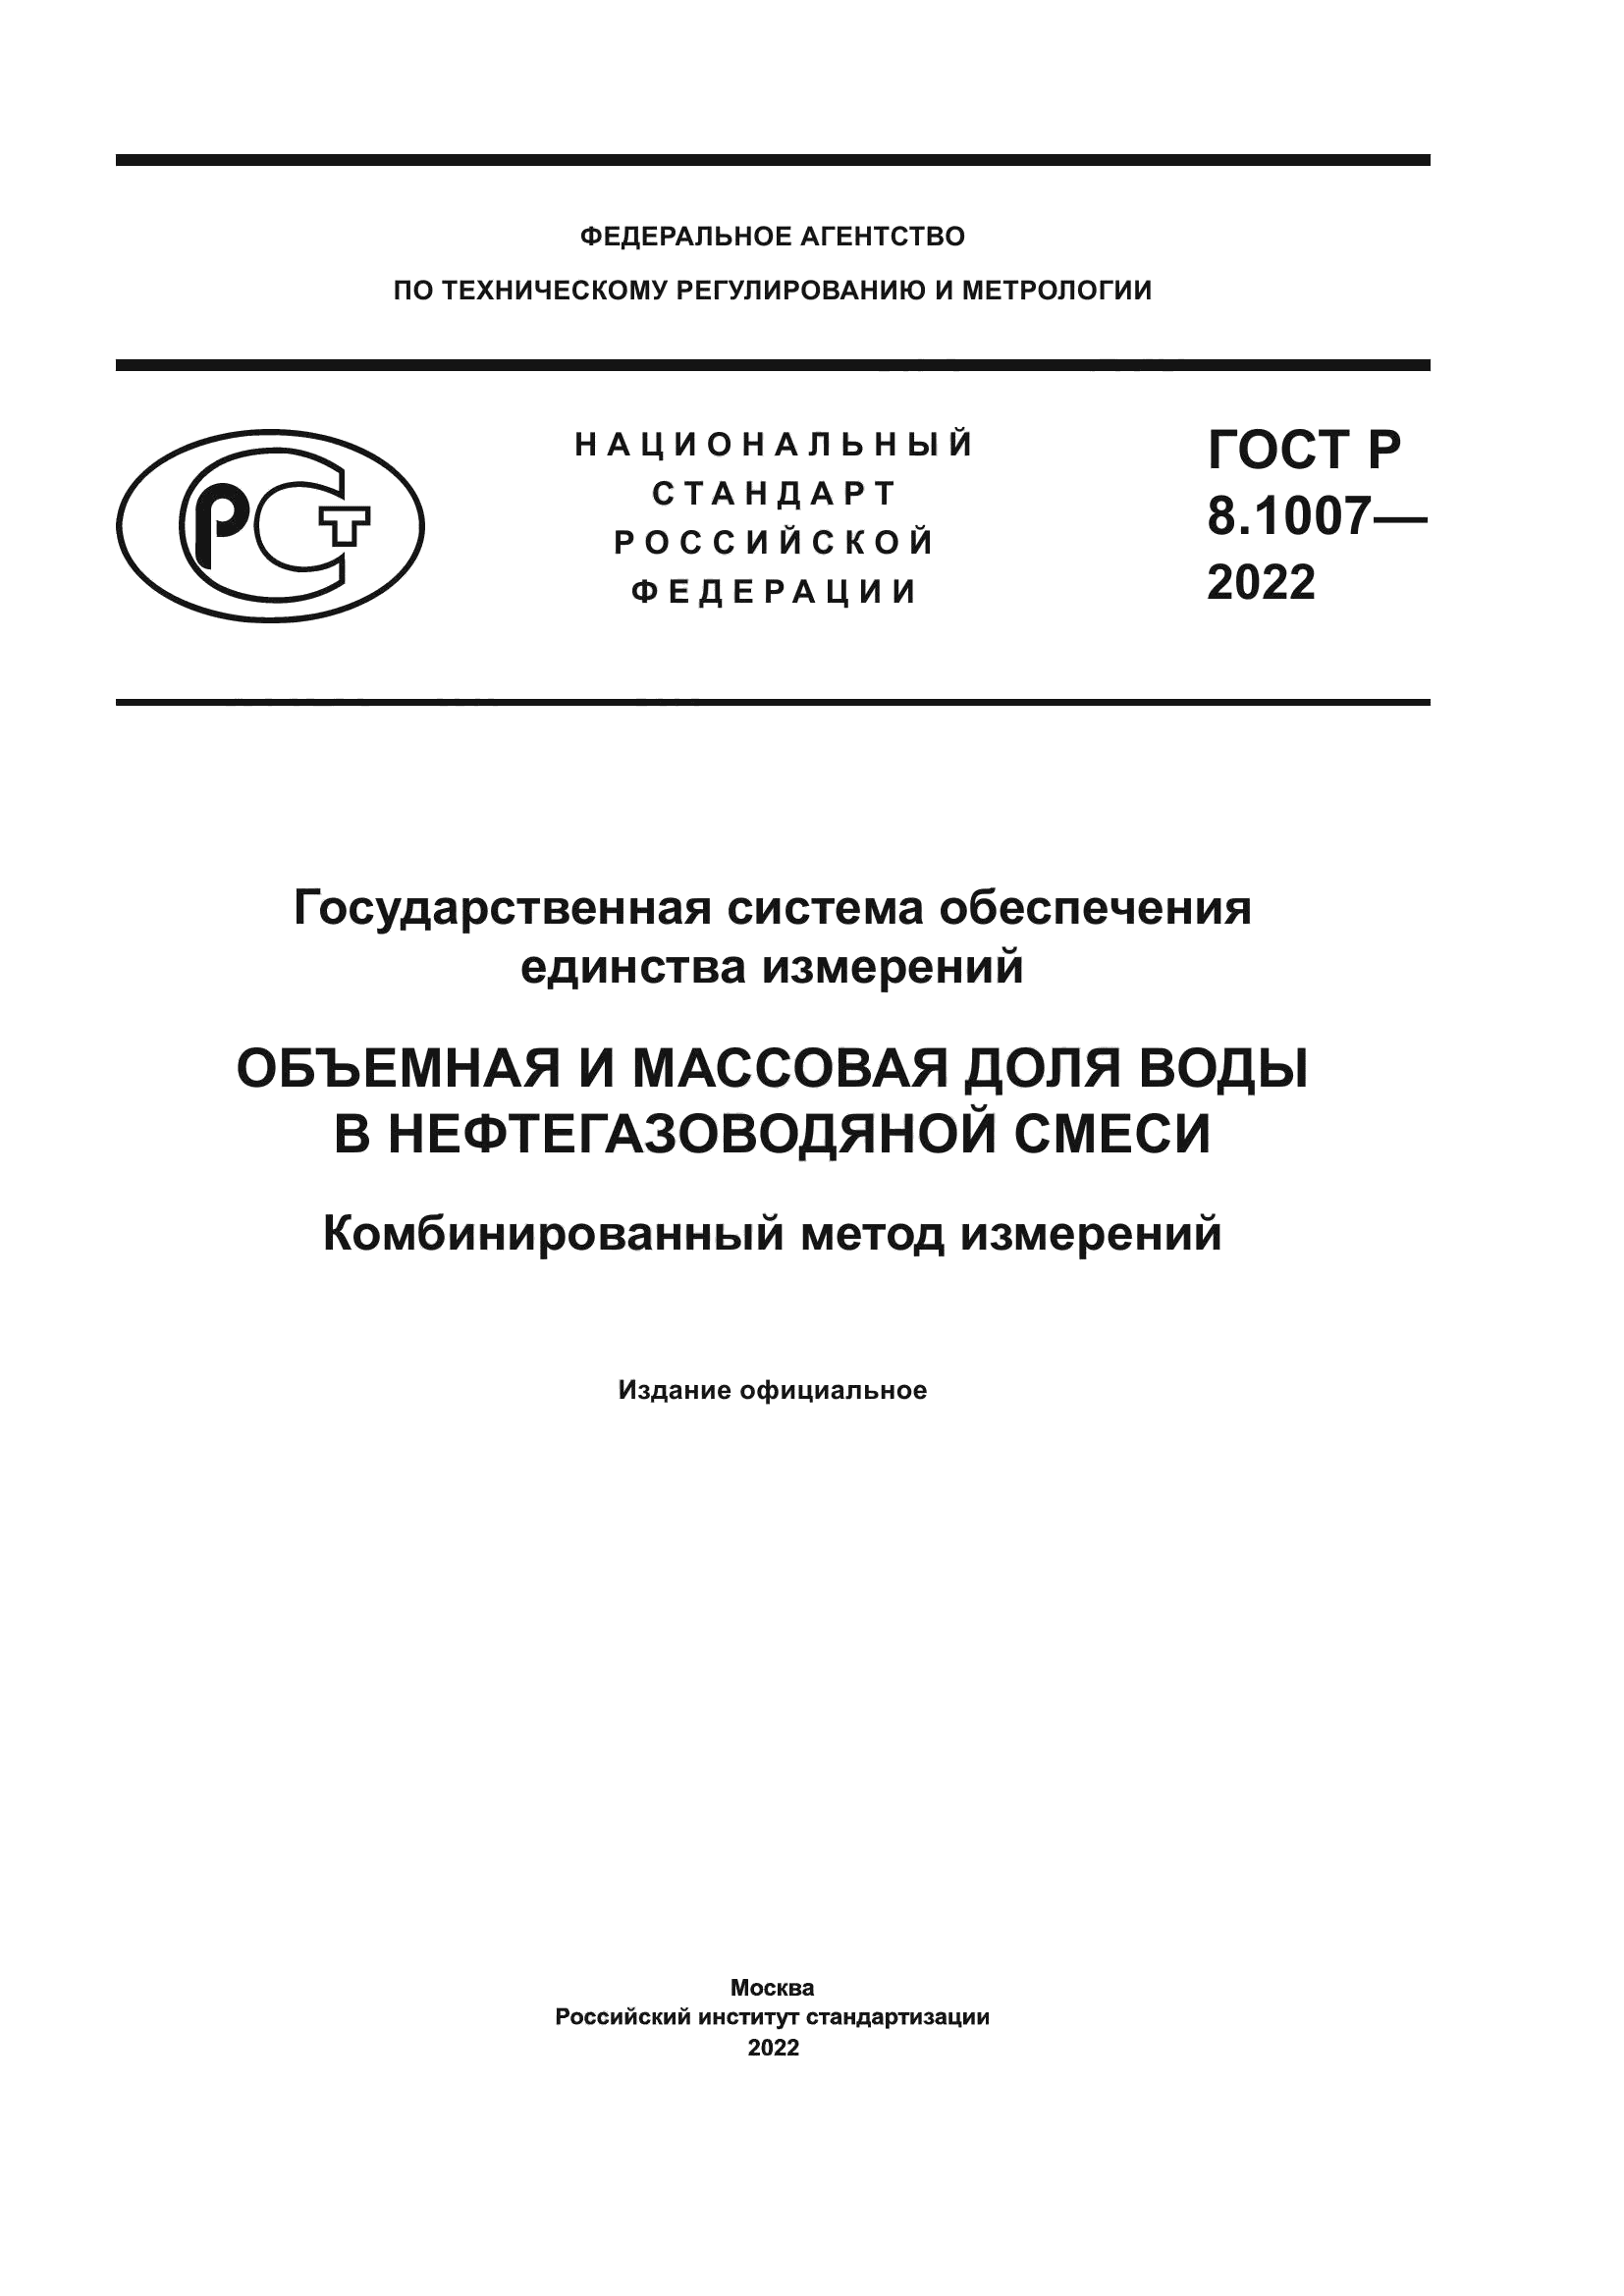 ГОСТ Р 8.1007-2022